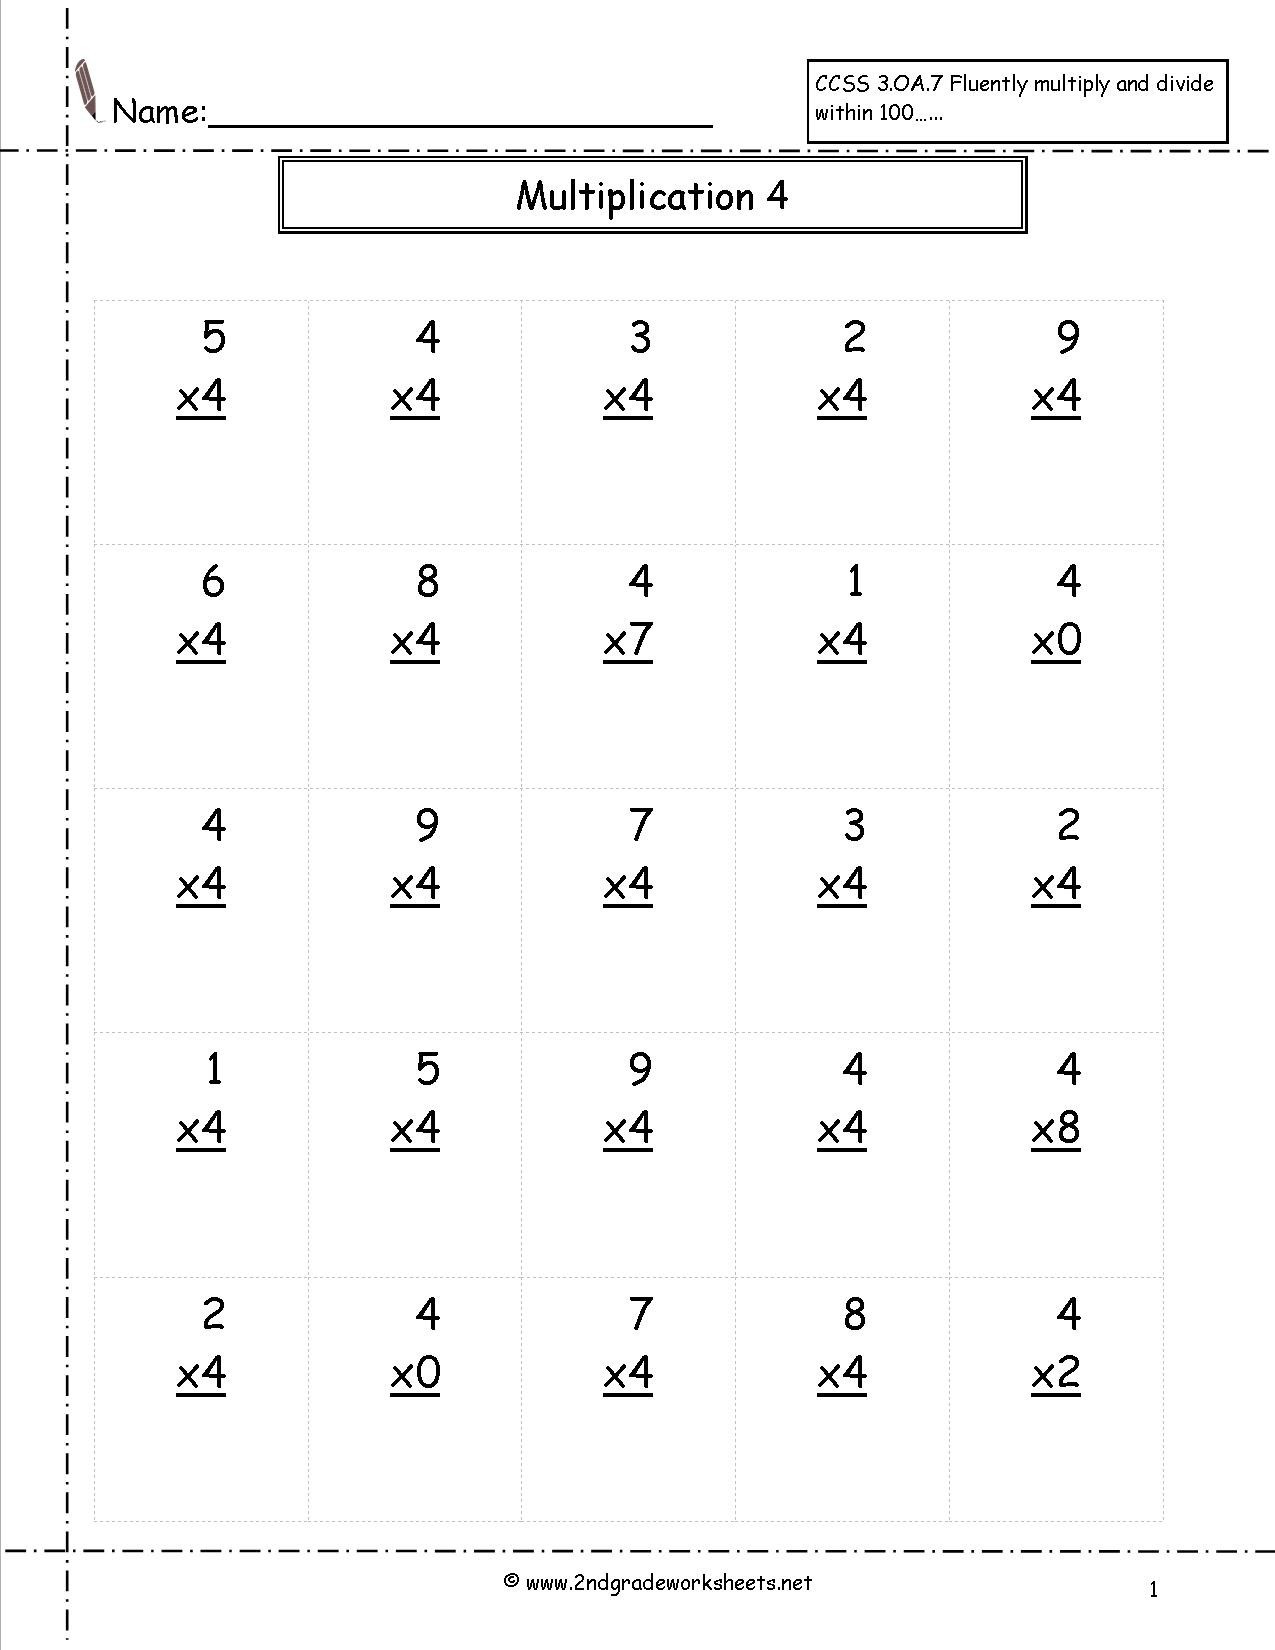 printable multiplication worksheets by 3 20